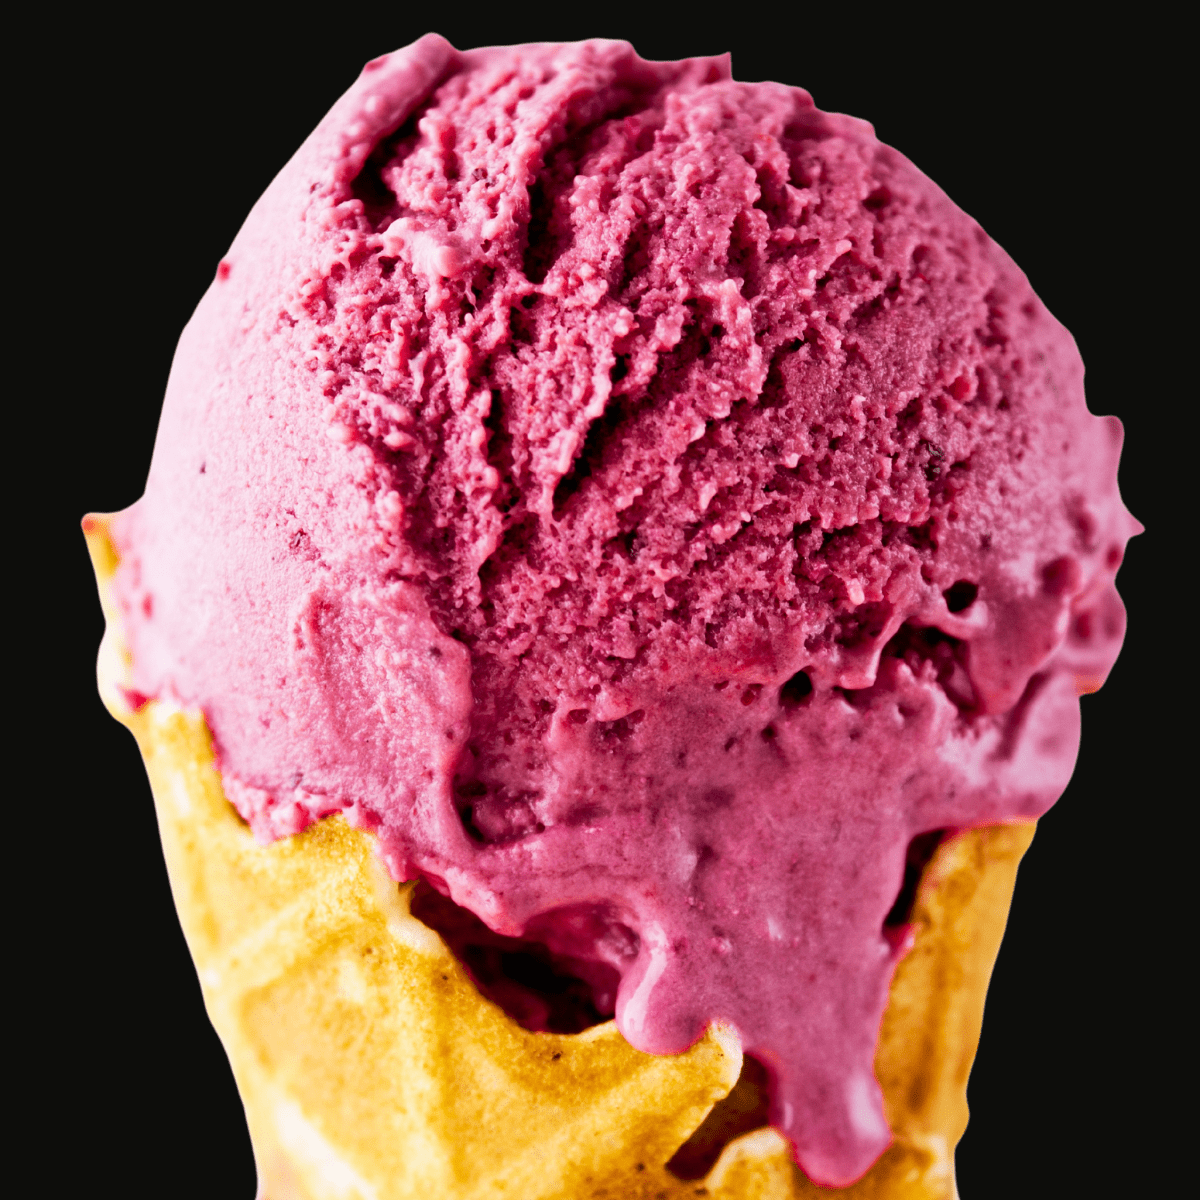 scoop of purple ice cream on cone